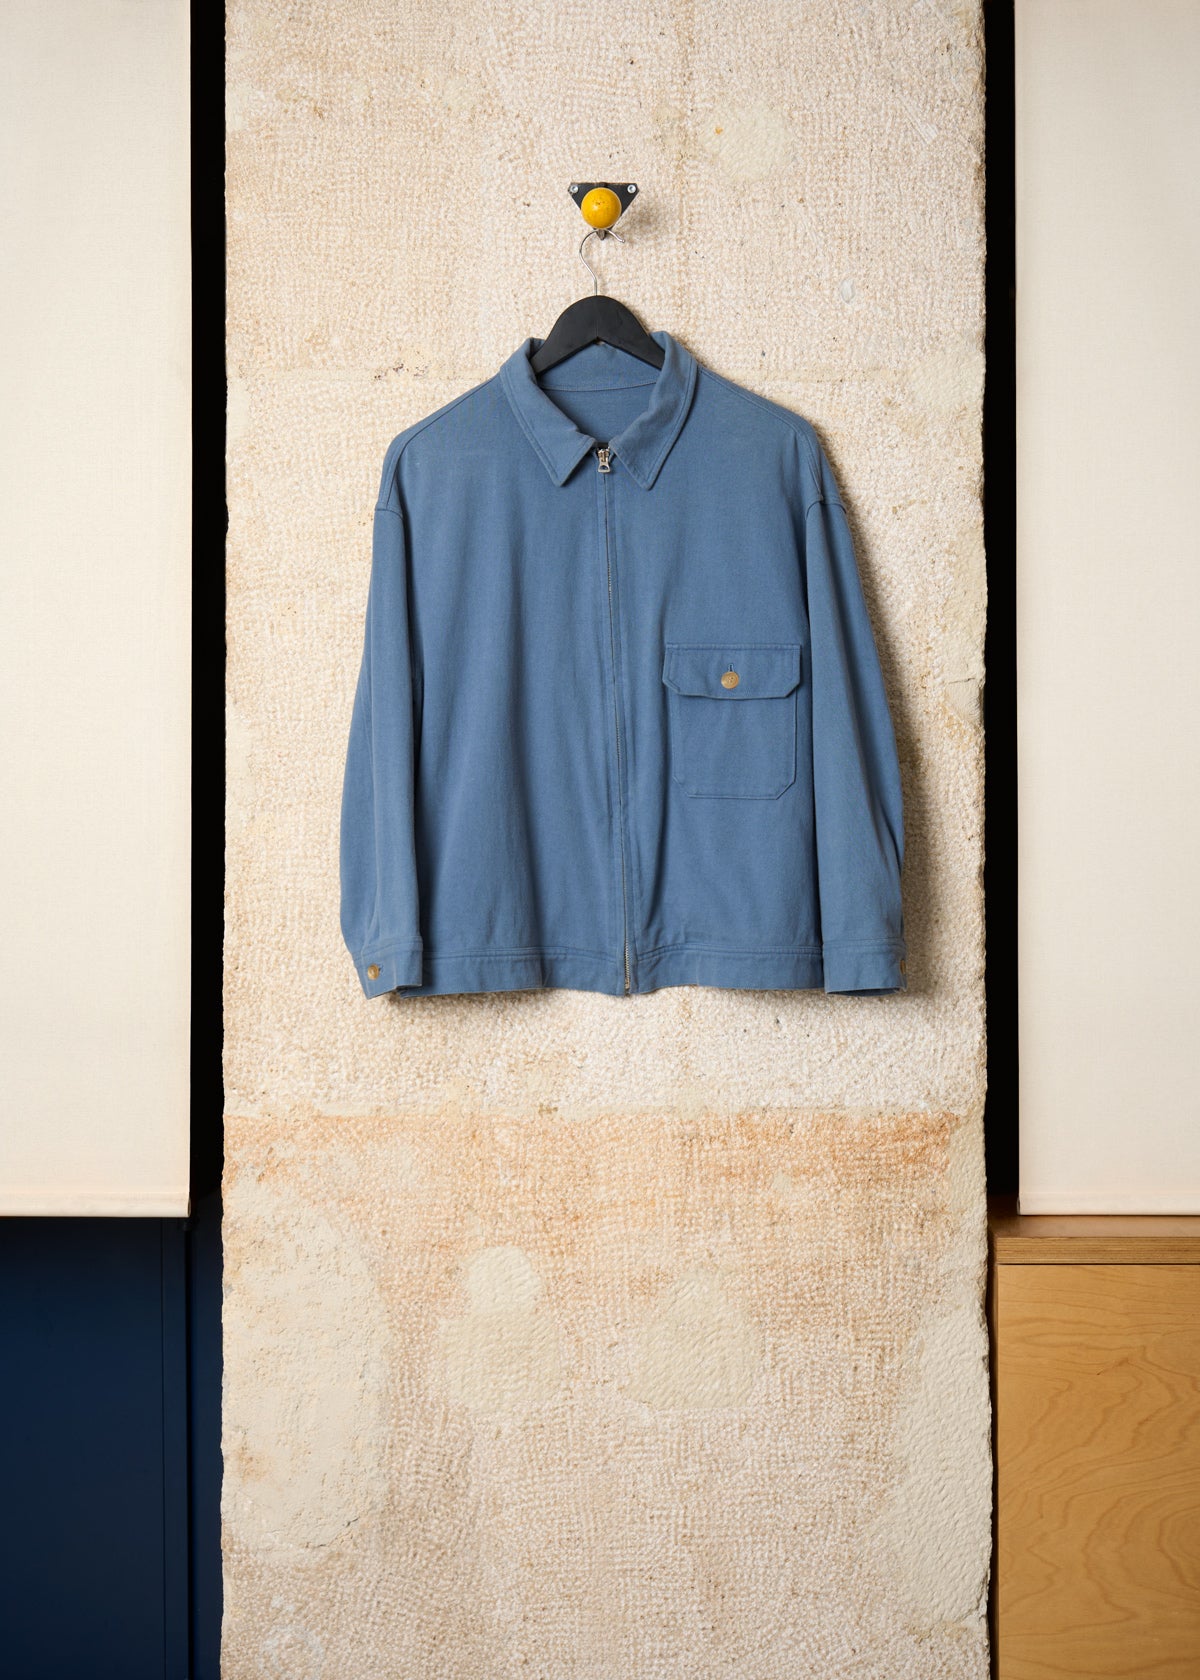 Y's Men For Men Blue Light Cotton 1 Pocket Zip Work Jacket SS1994 - Small